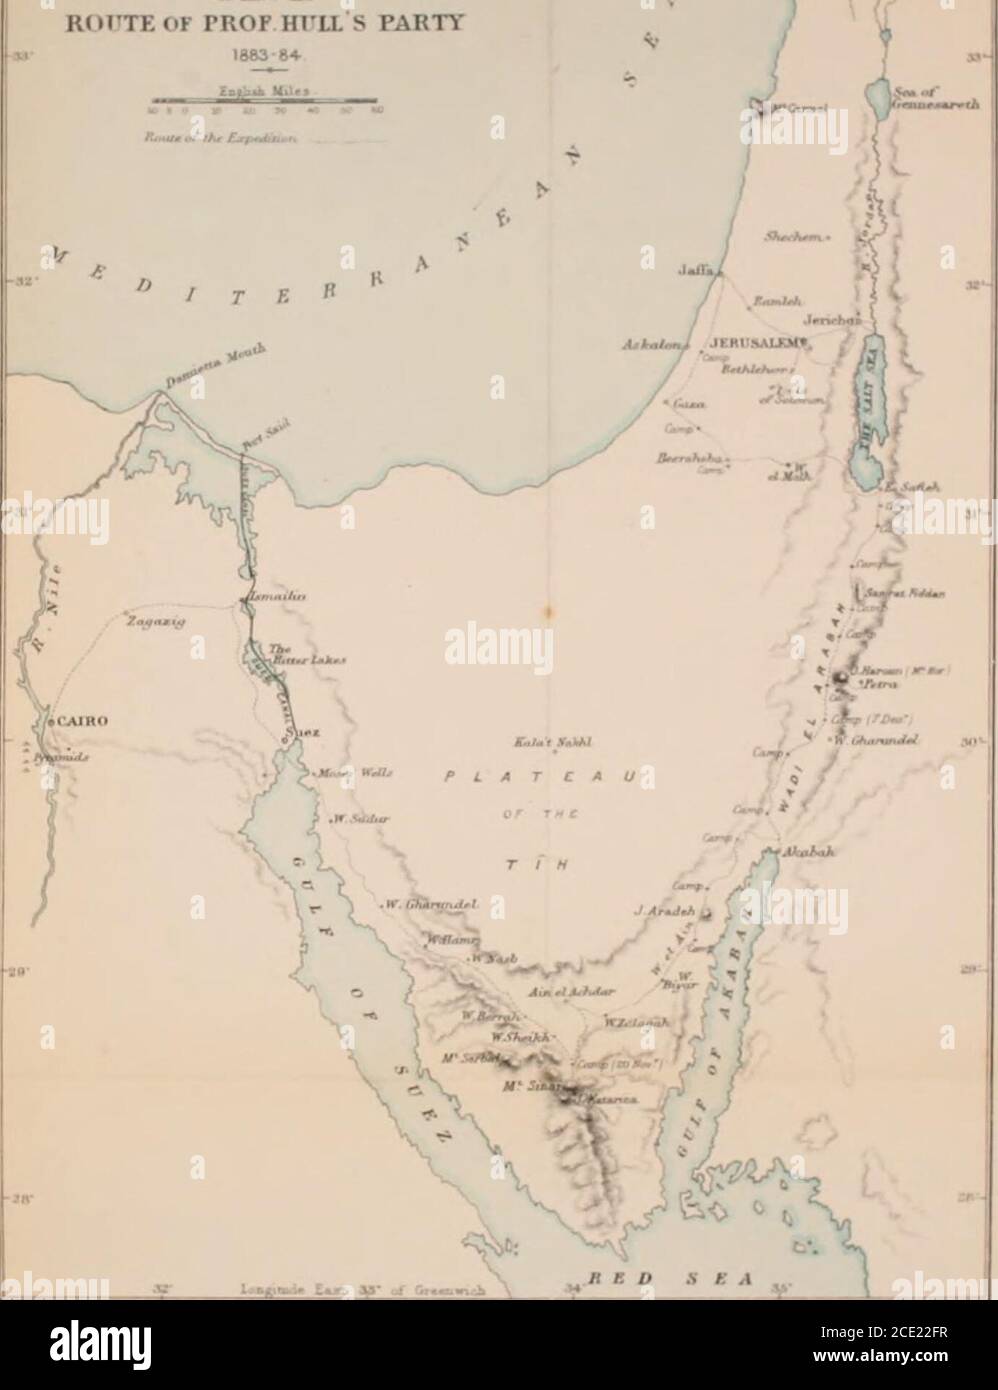 Monte Seir Sinai E Palestina Occidentale Essere Una Narrazione Di Una Spedizione Scientifica 31 Tnatm V G Np Deo Y W Ghanmdel Mappa Di Schizzo Rdfteof Prof Hru S Fartl 18 84 B B D